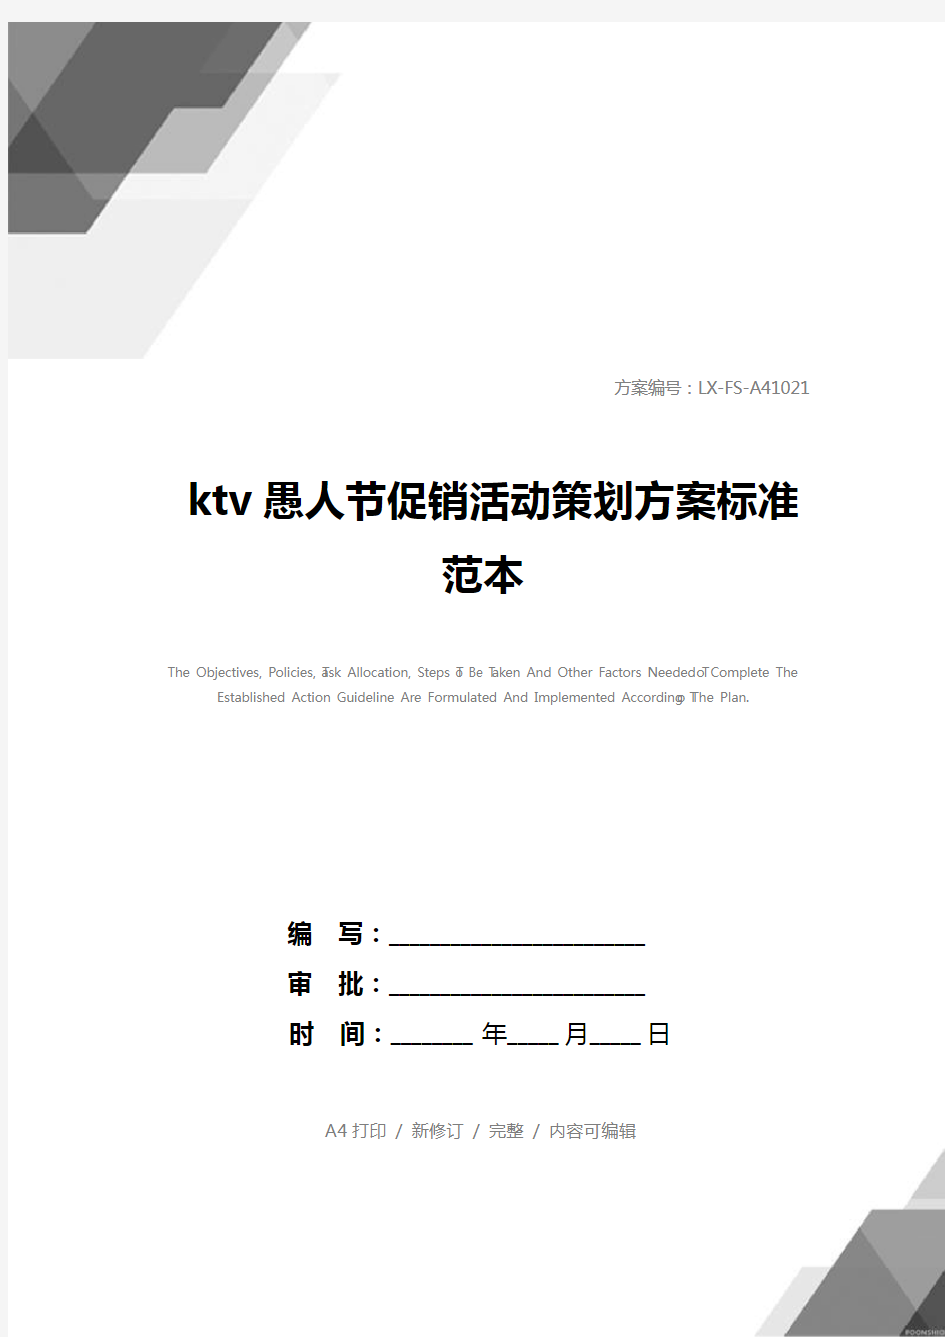 ktv愚人节促销活动策划方案标准范本